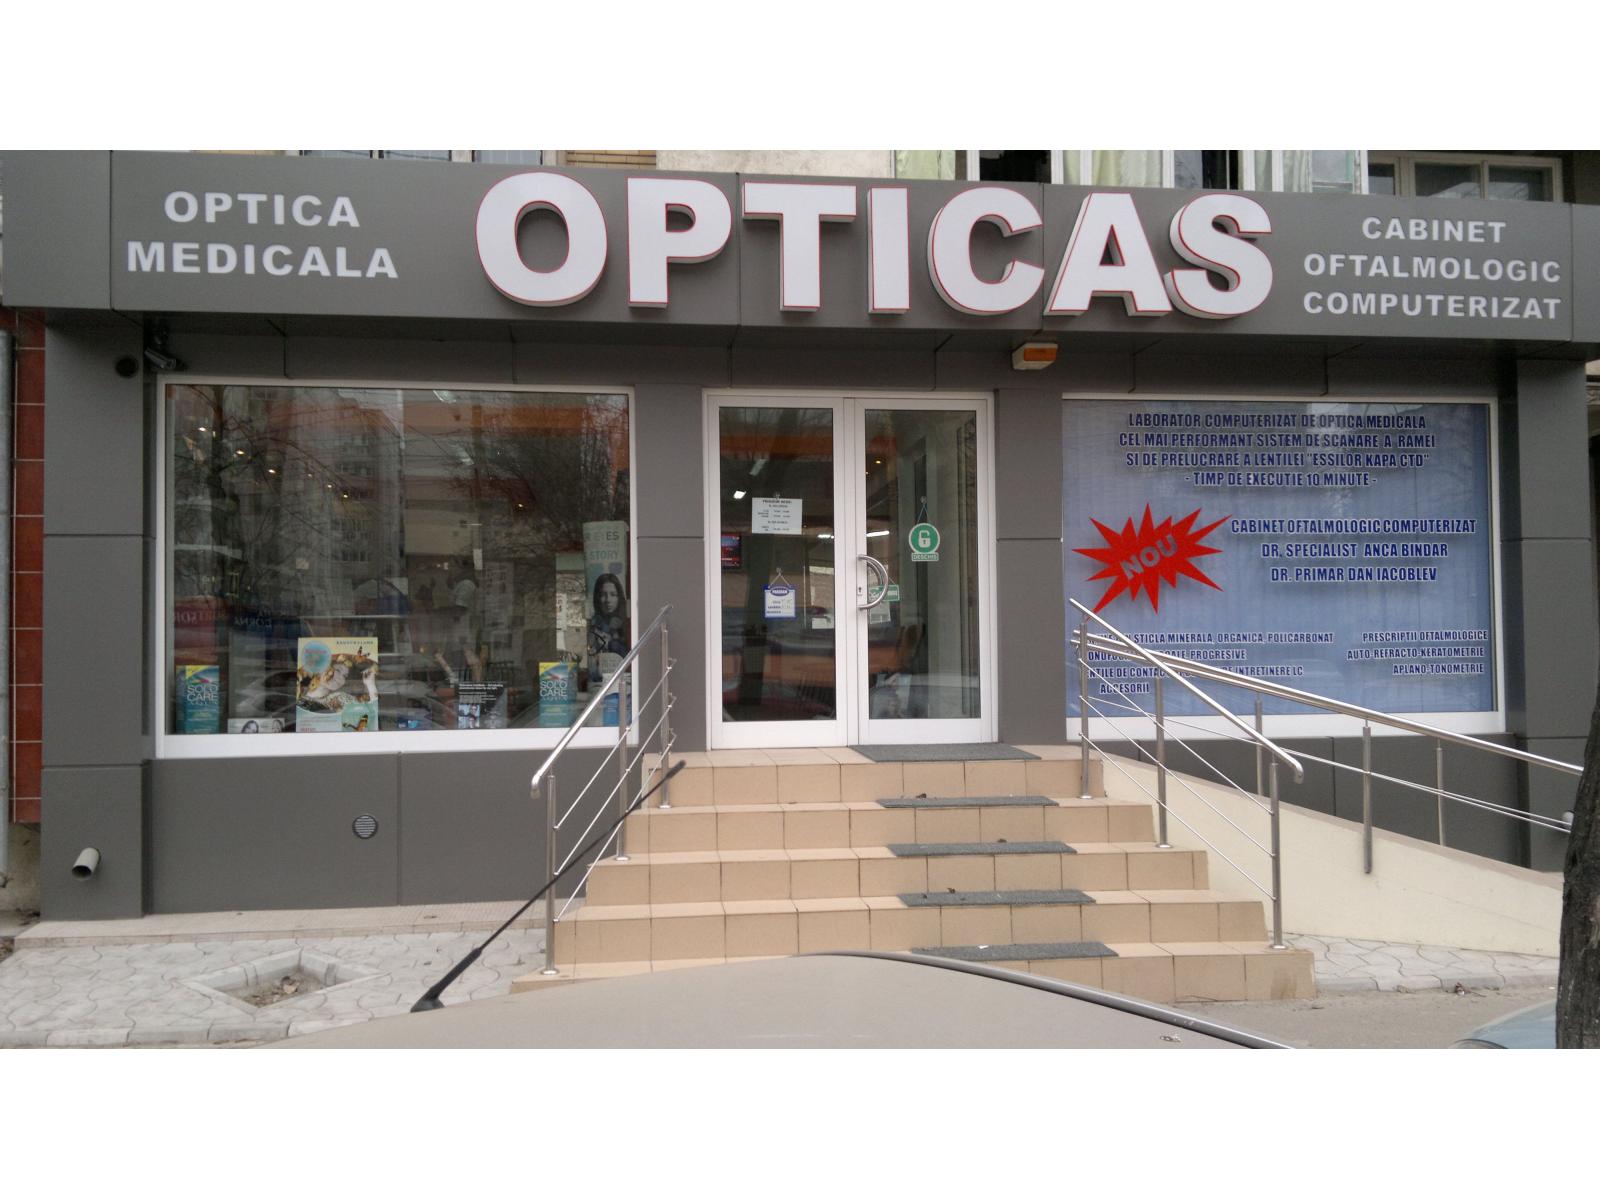 OPTICAS - 17032011213.jpg